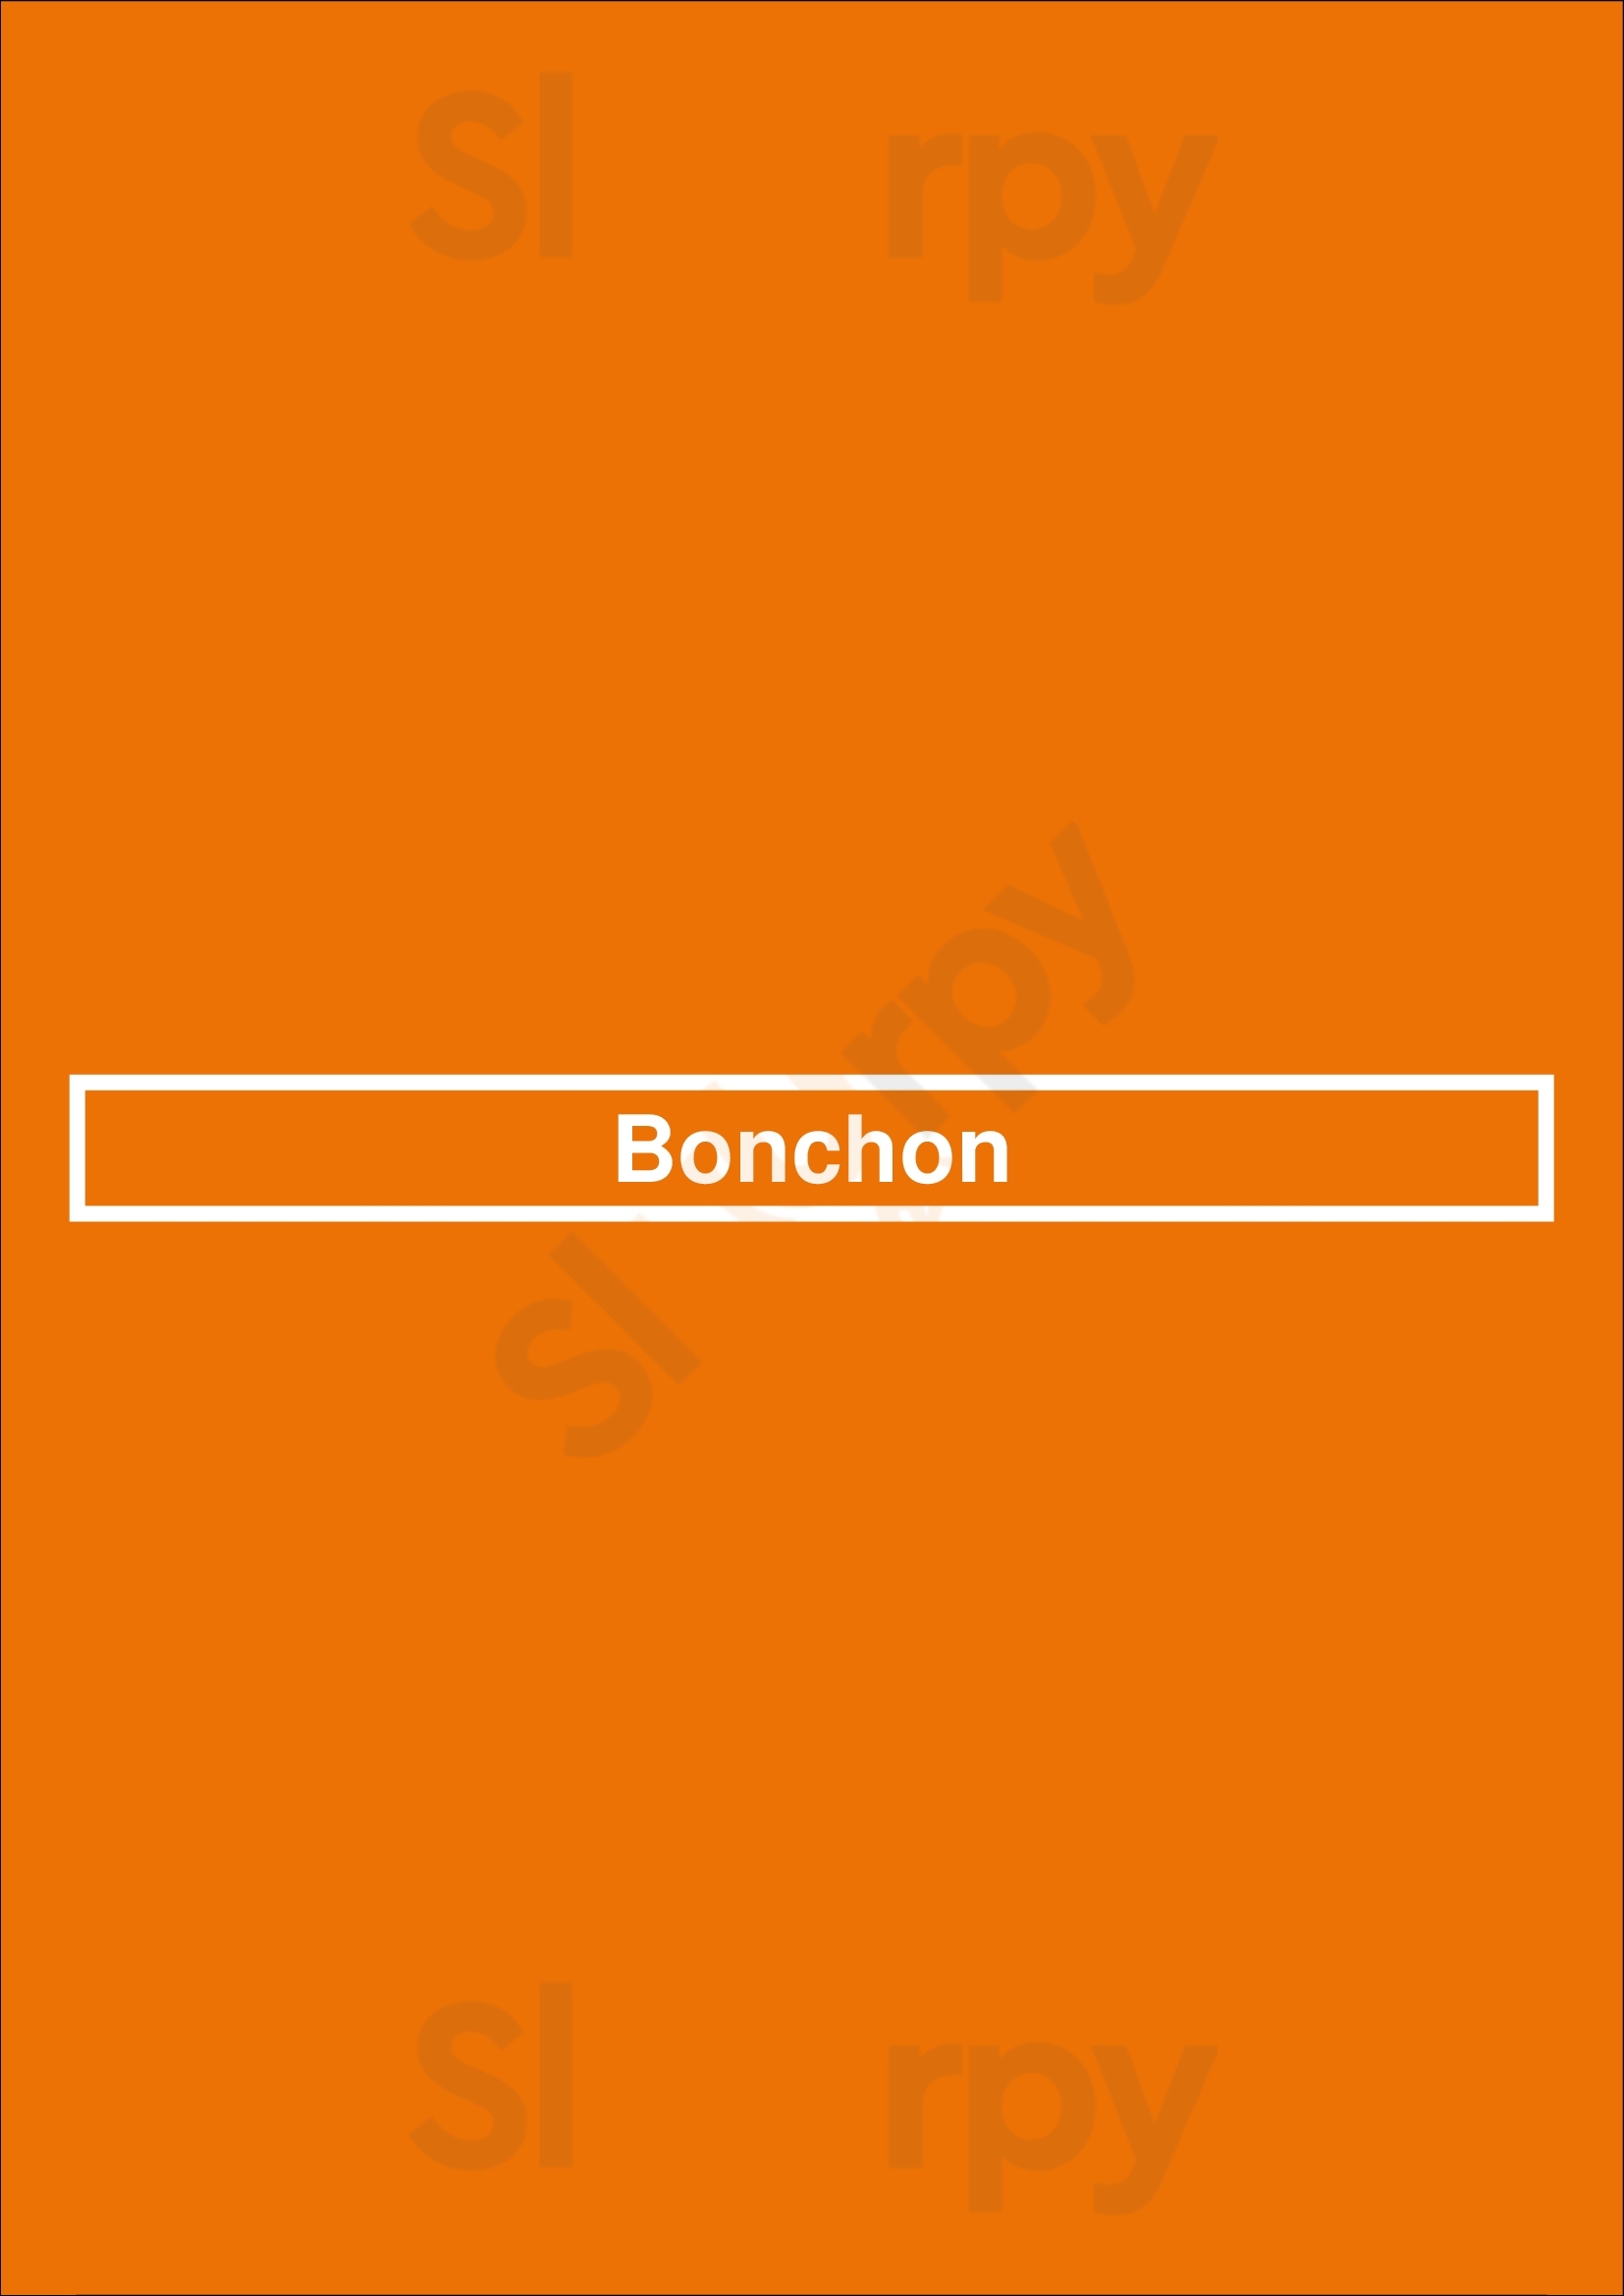 Bonchon Pasadena Menu - 1